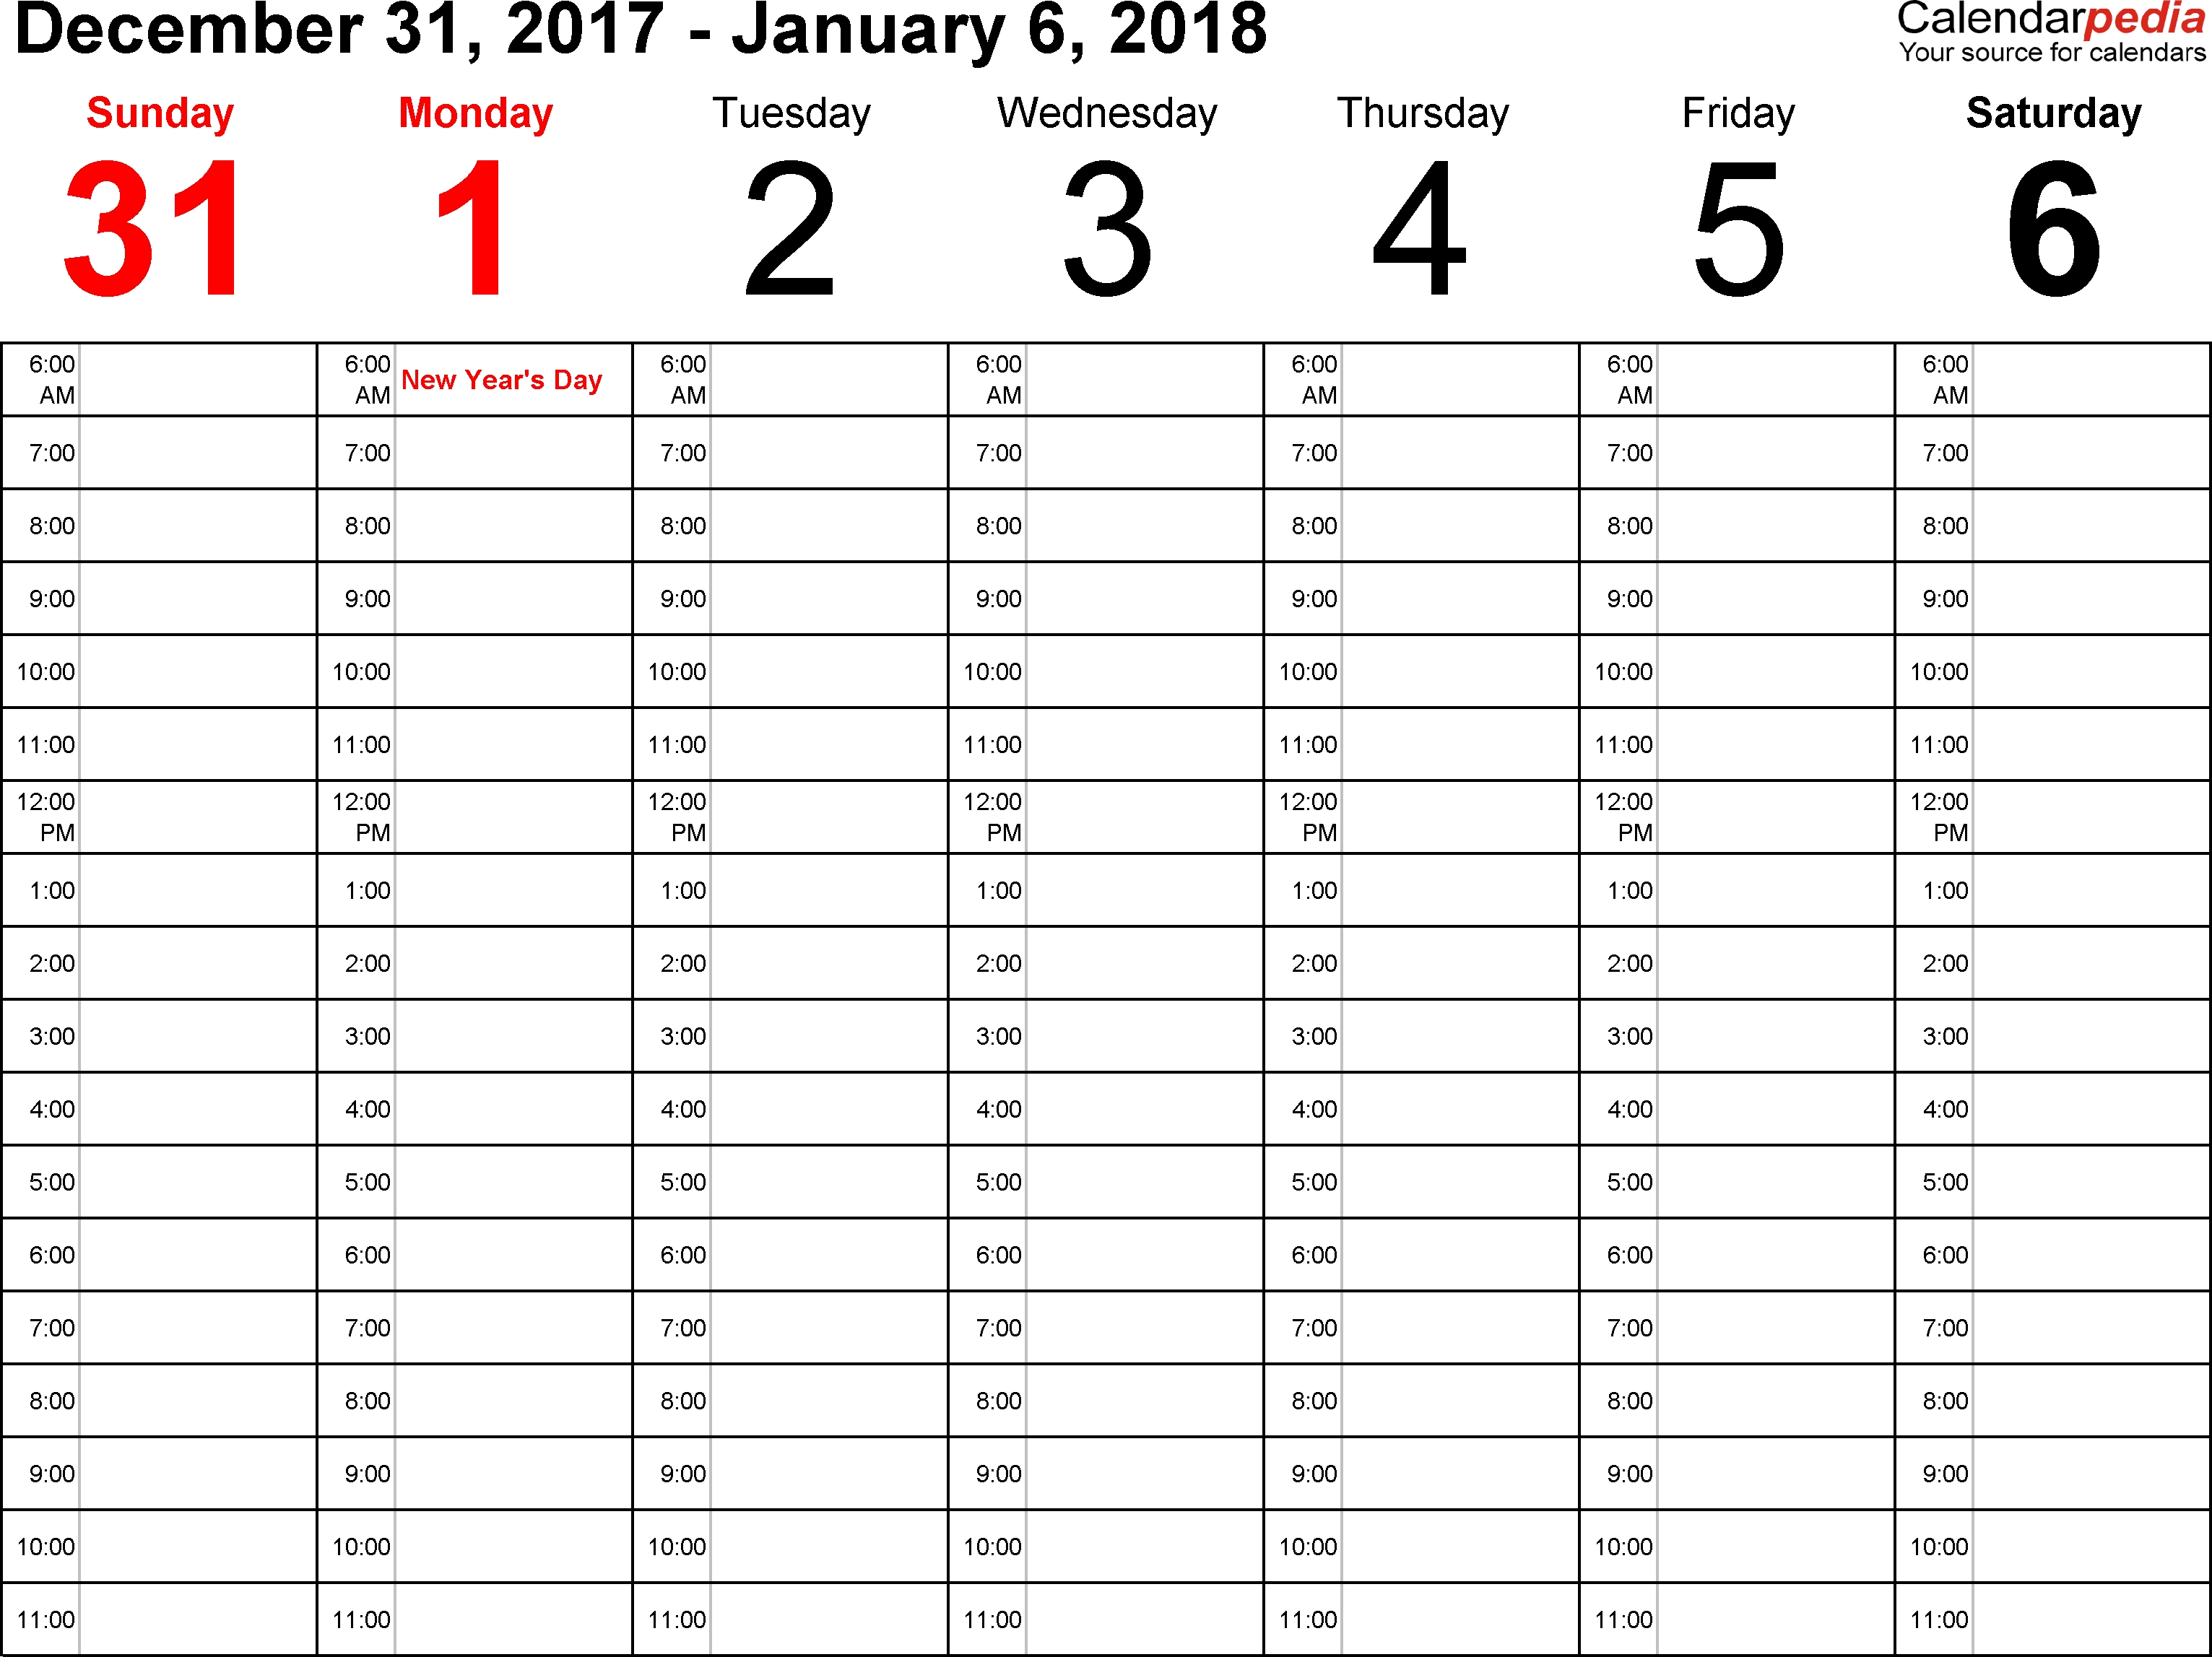 Weekly Calendar 2018 For Word - 12 Free Printable Templates throughout Free Printable Calendar Templates 8 X 10